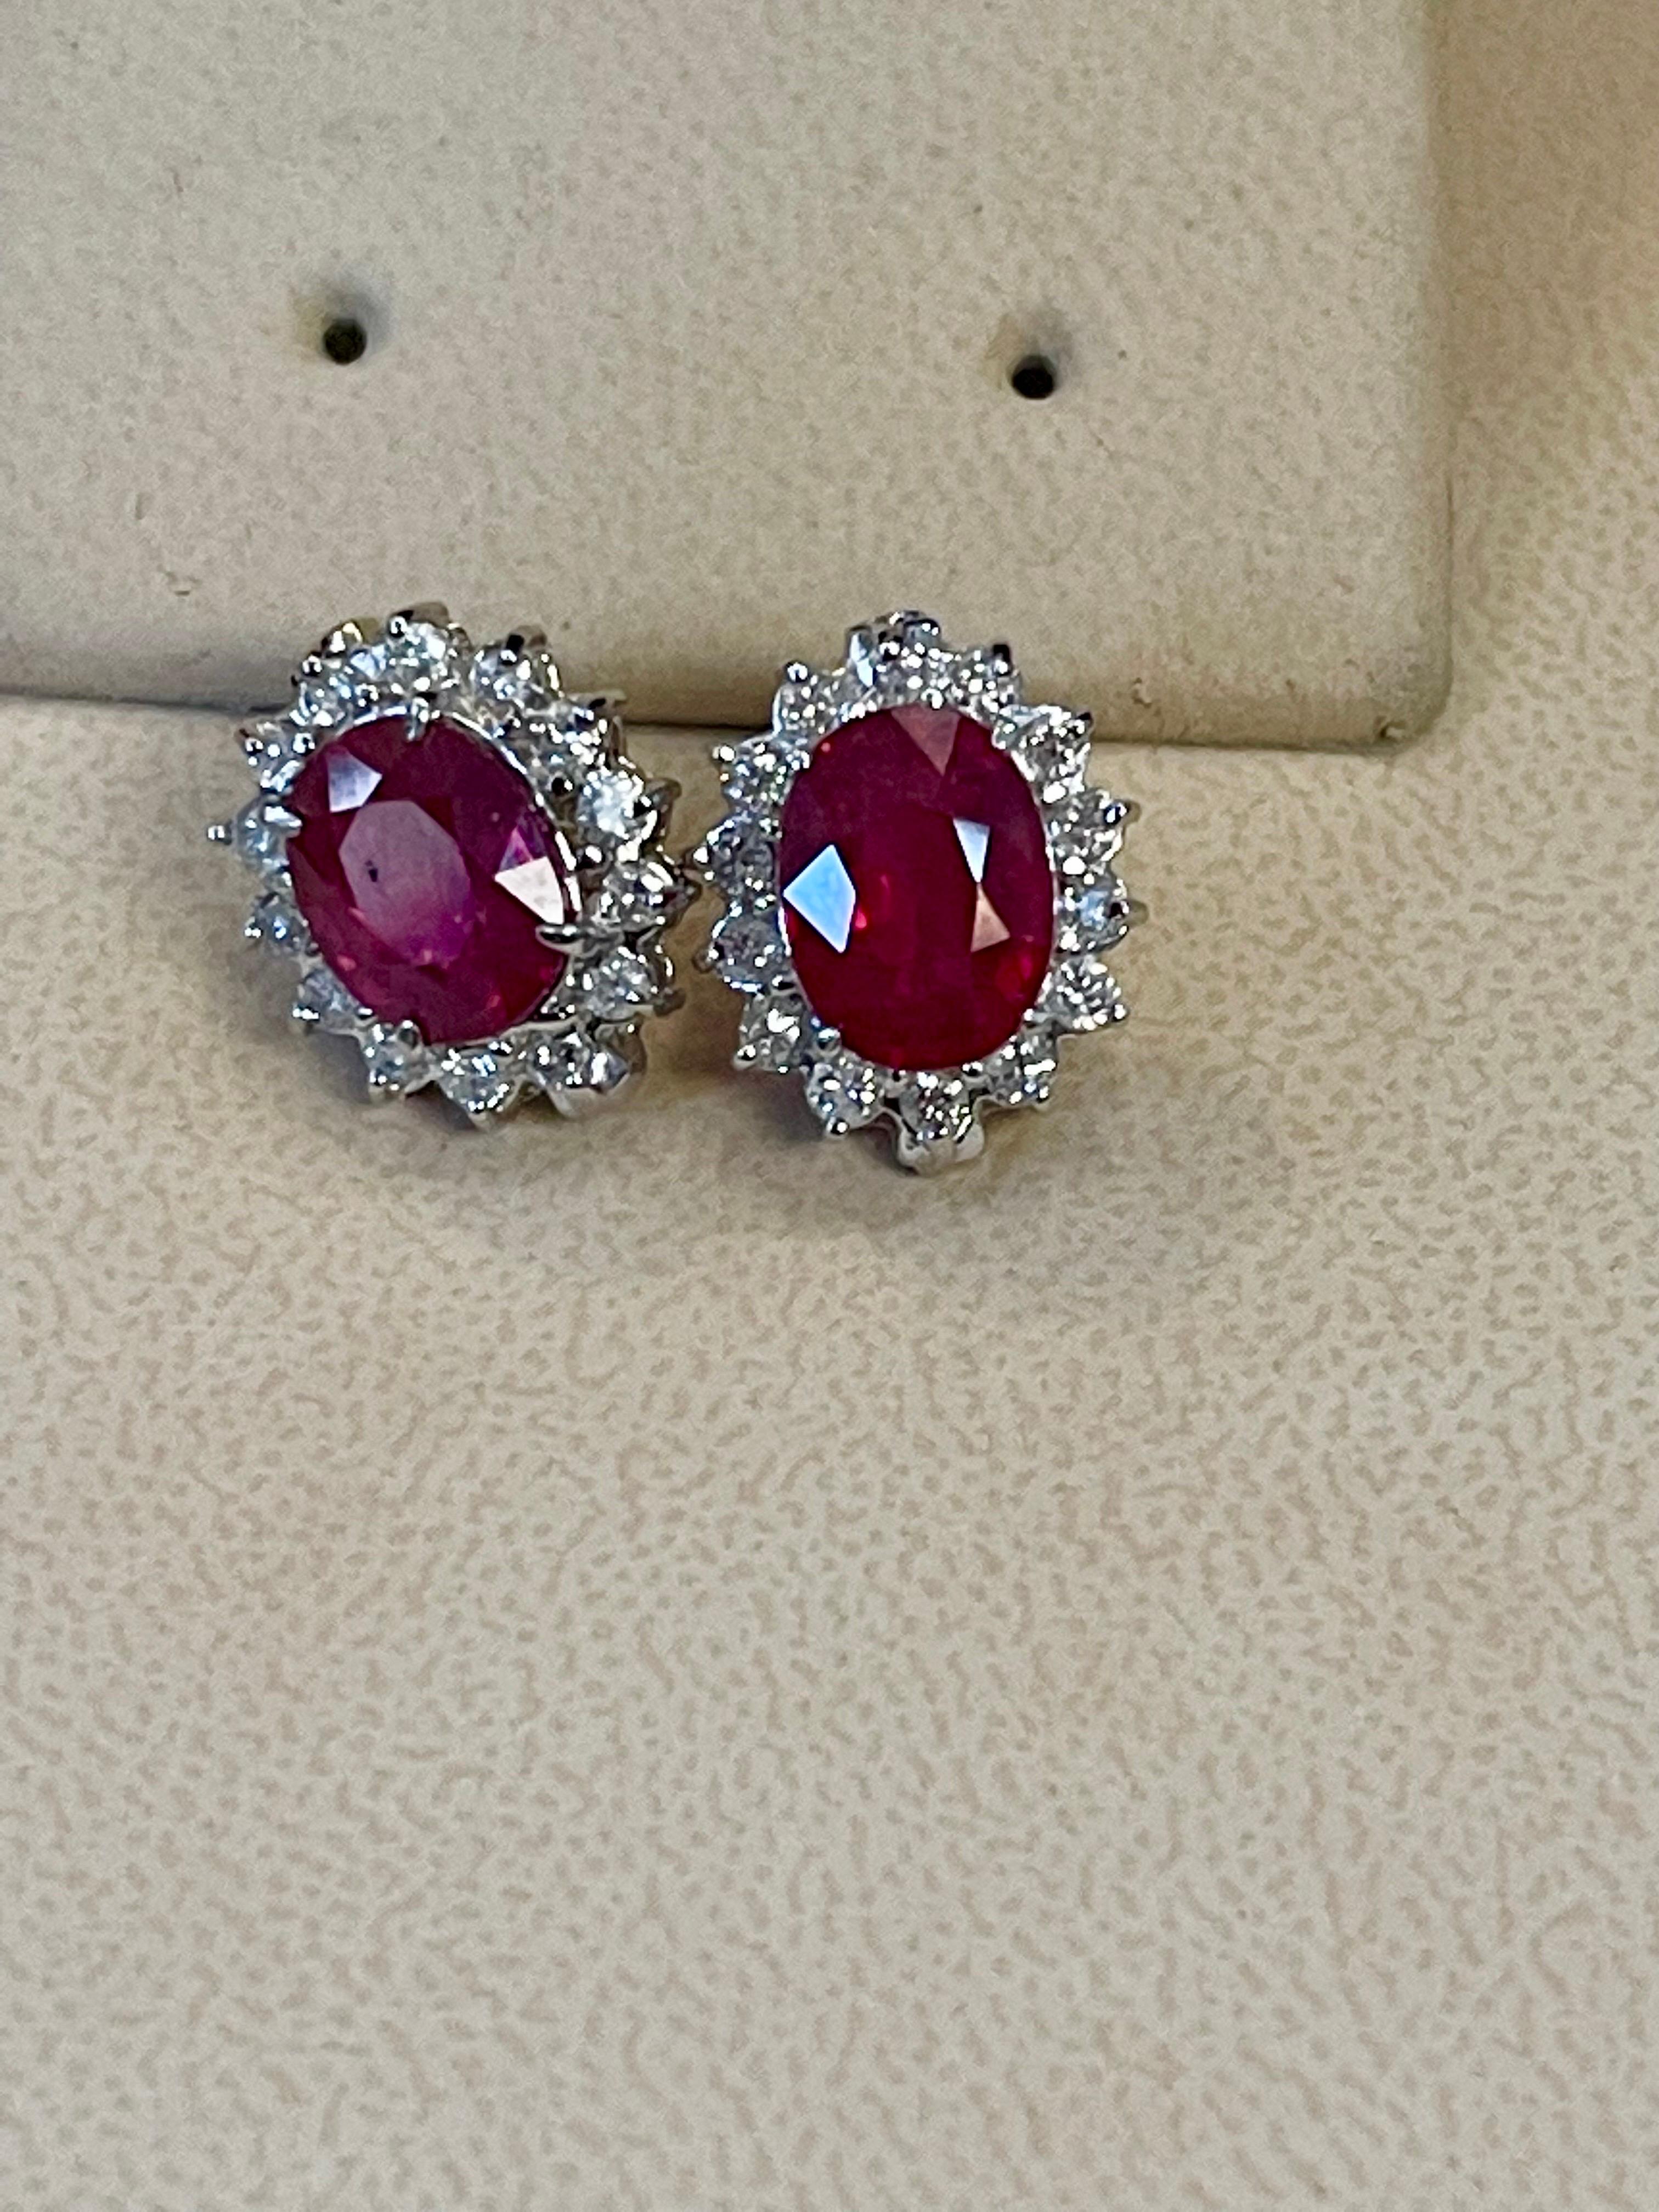 6 Carat Oval Treated Ruby & 1.2 Ct Diamond Stud Earrings 14 Karat White Gold For Sale 4